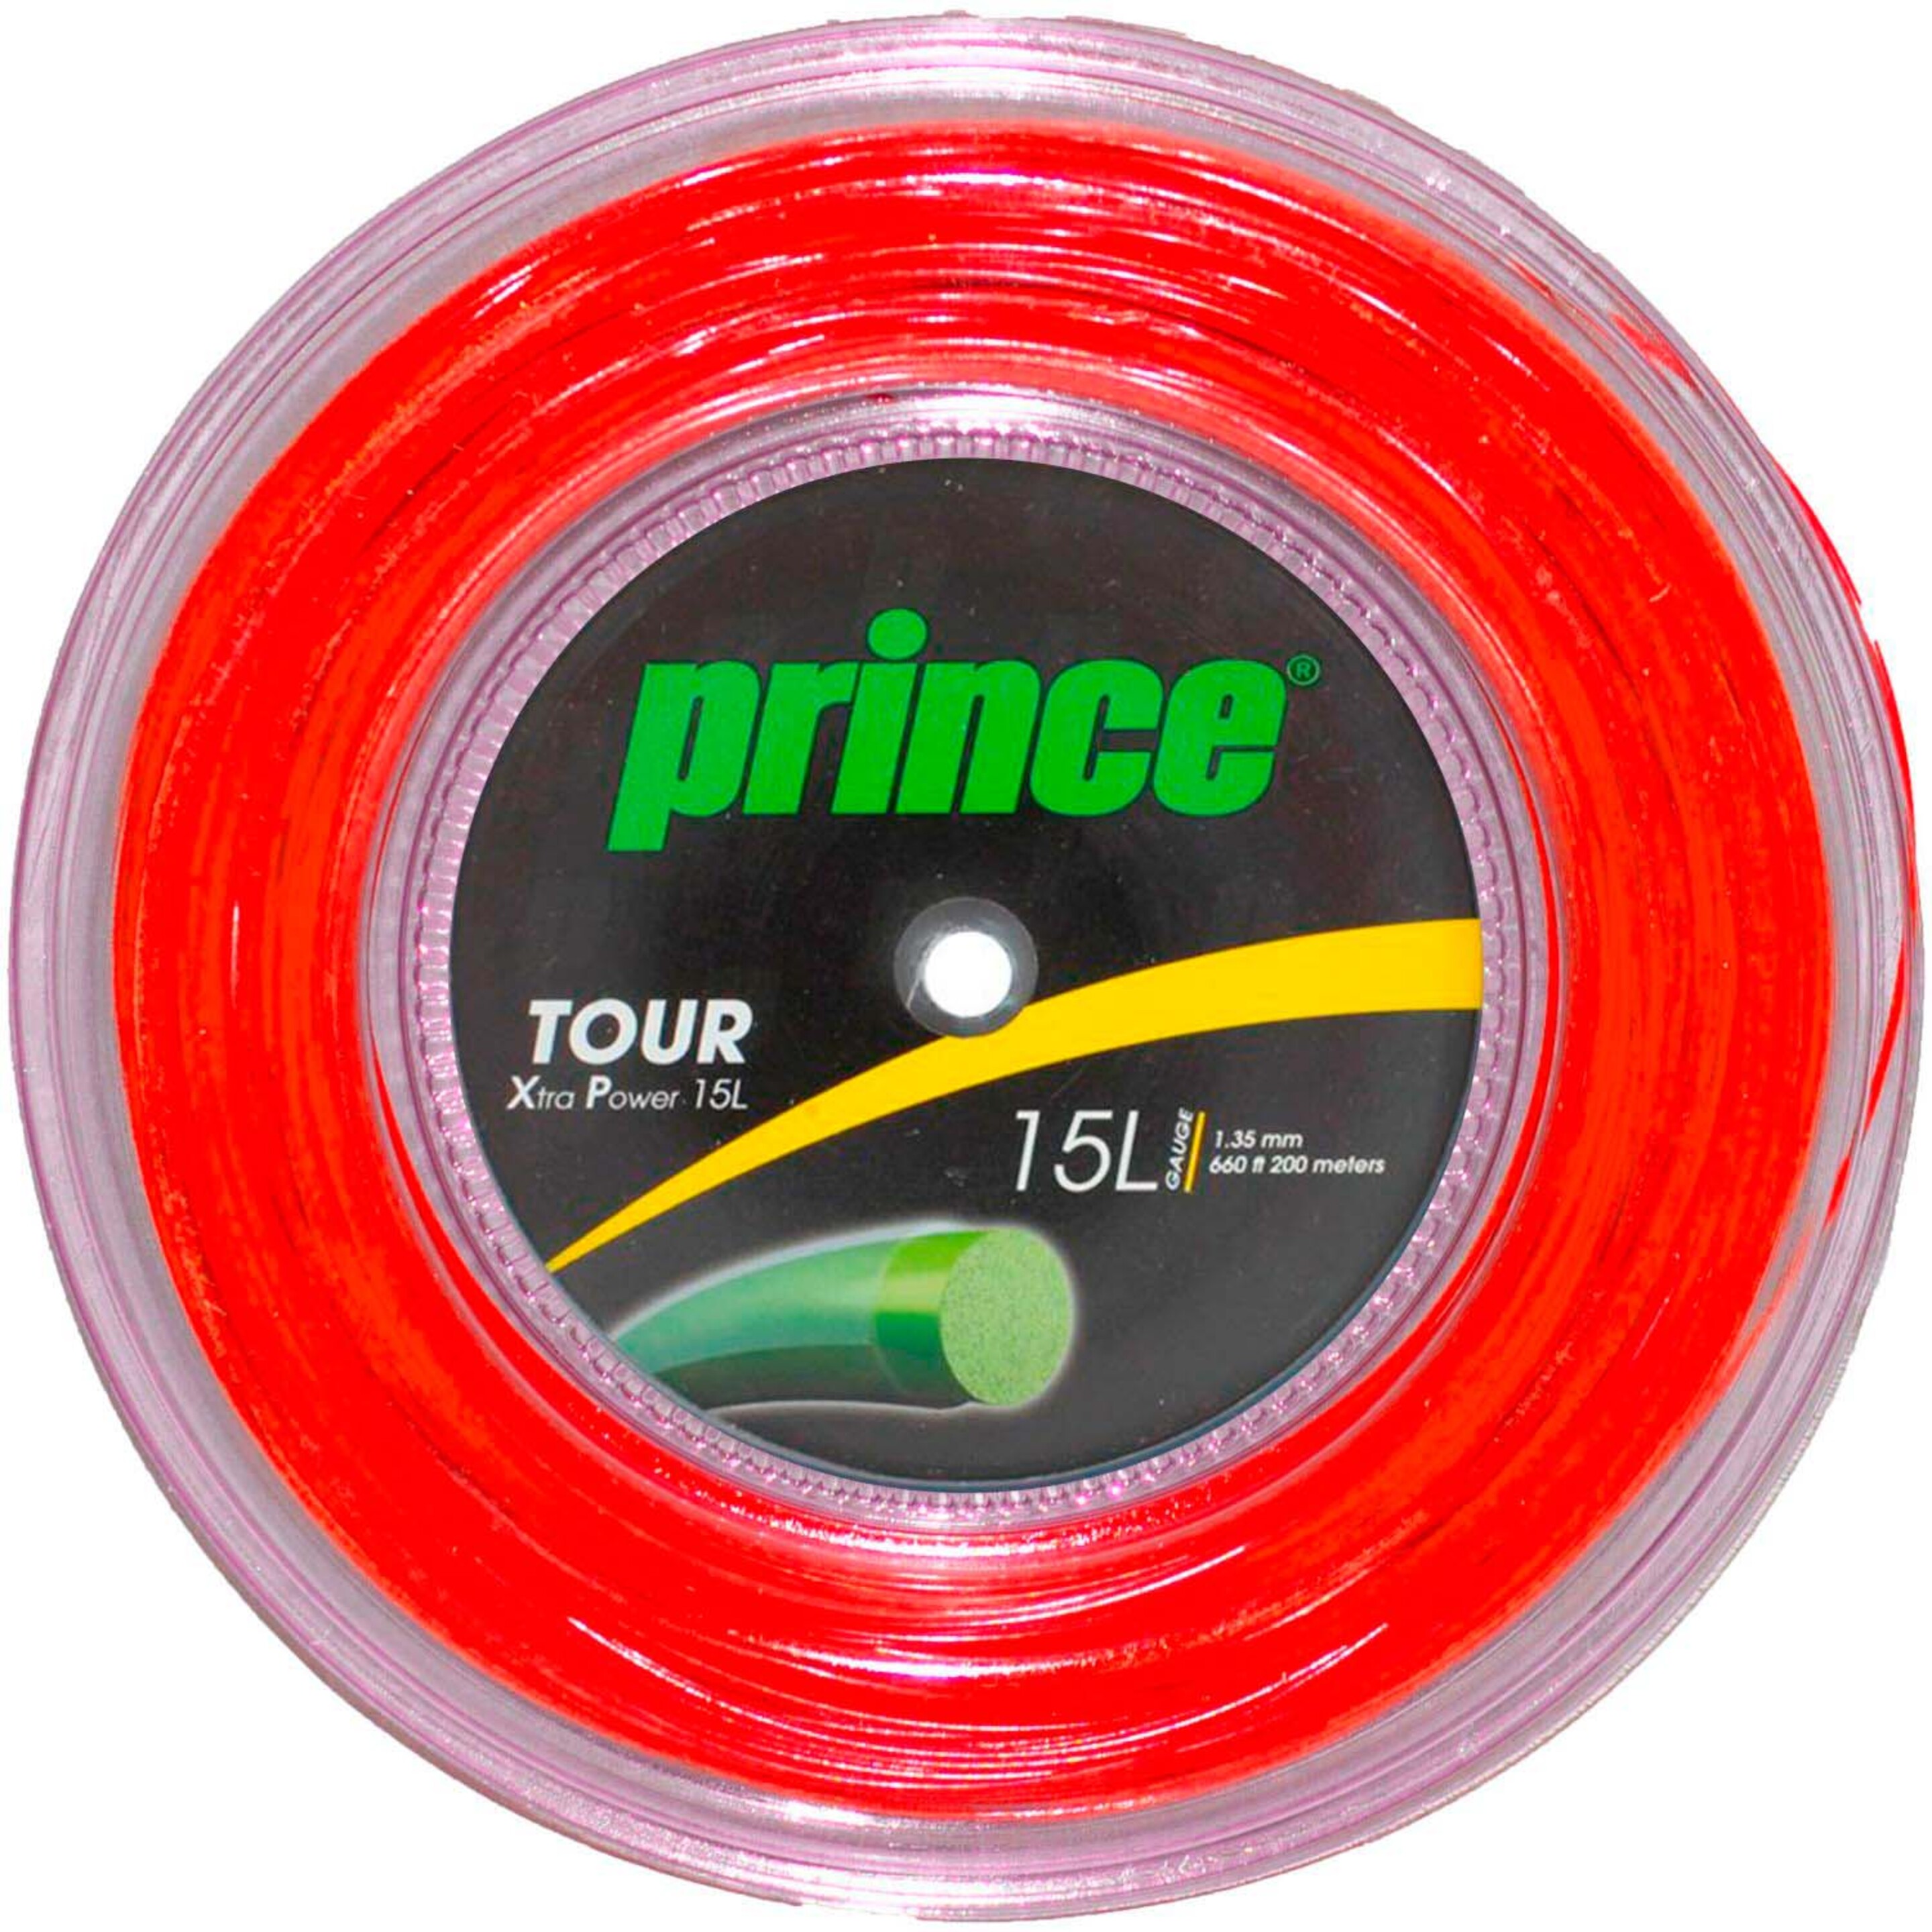 Cordaje De Tenis Prince Tour Xp 15l (1.38 Mm) (200m) - rojo - 